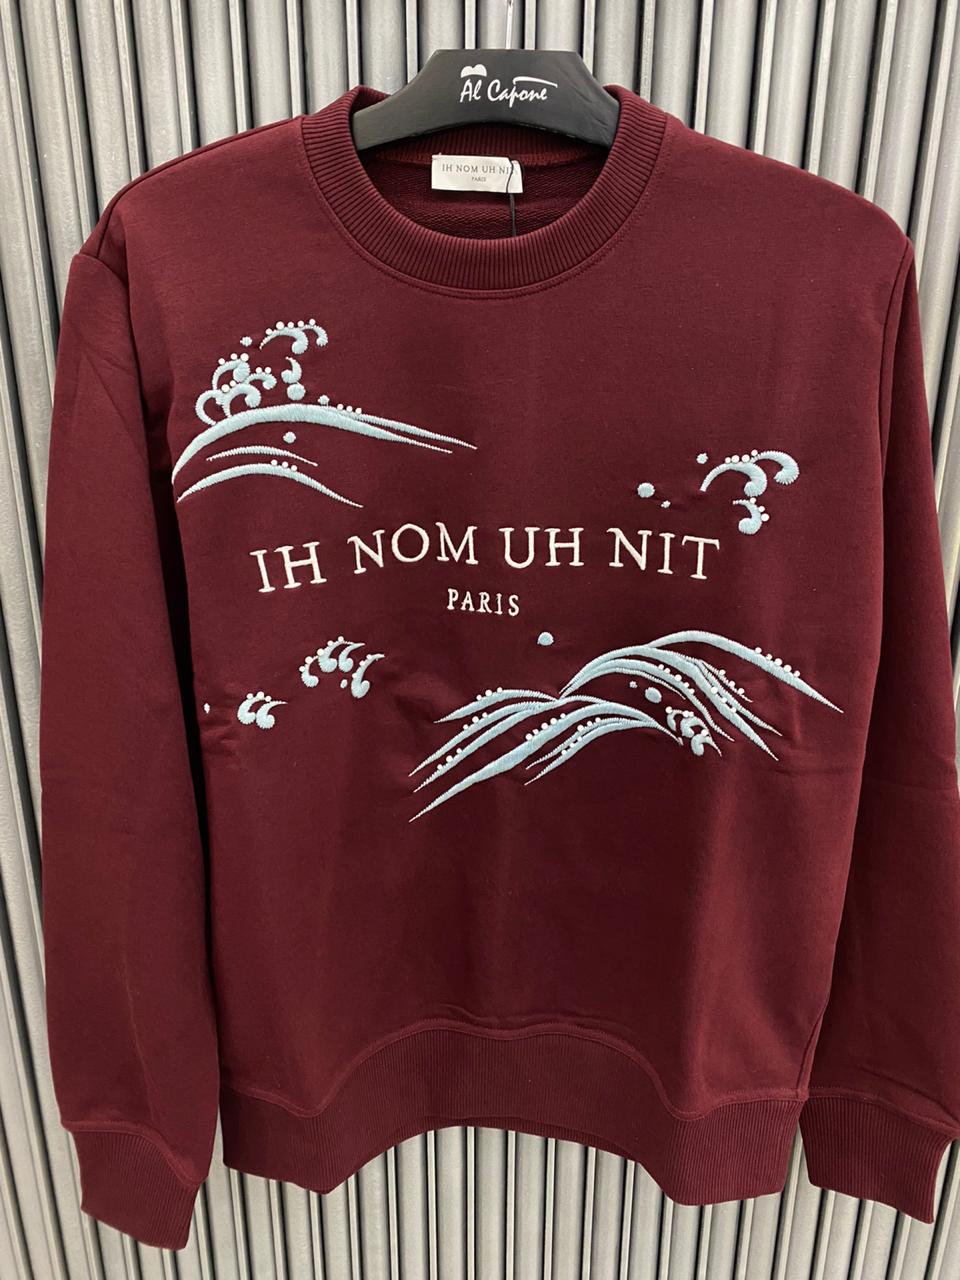 Ih Nom Uh Nit Sweater Waves Bourdeax - AL Capone PremiumClothingHoodies And Sweats634-9